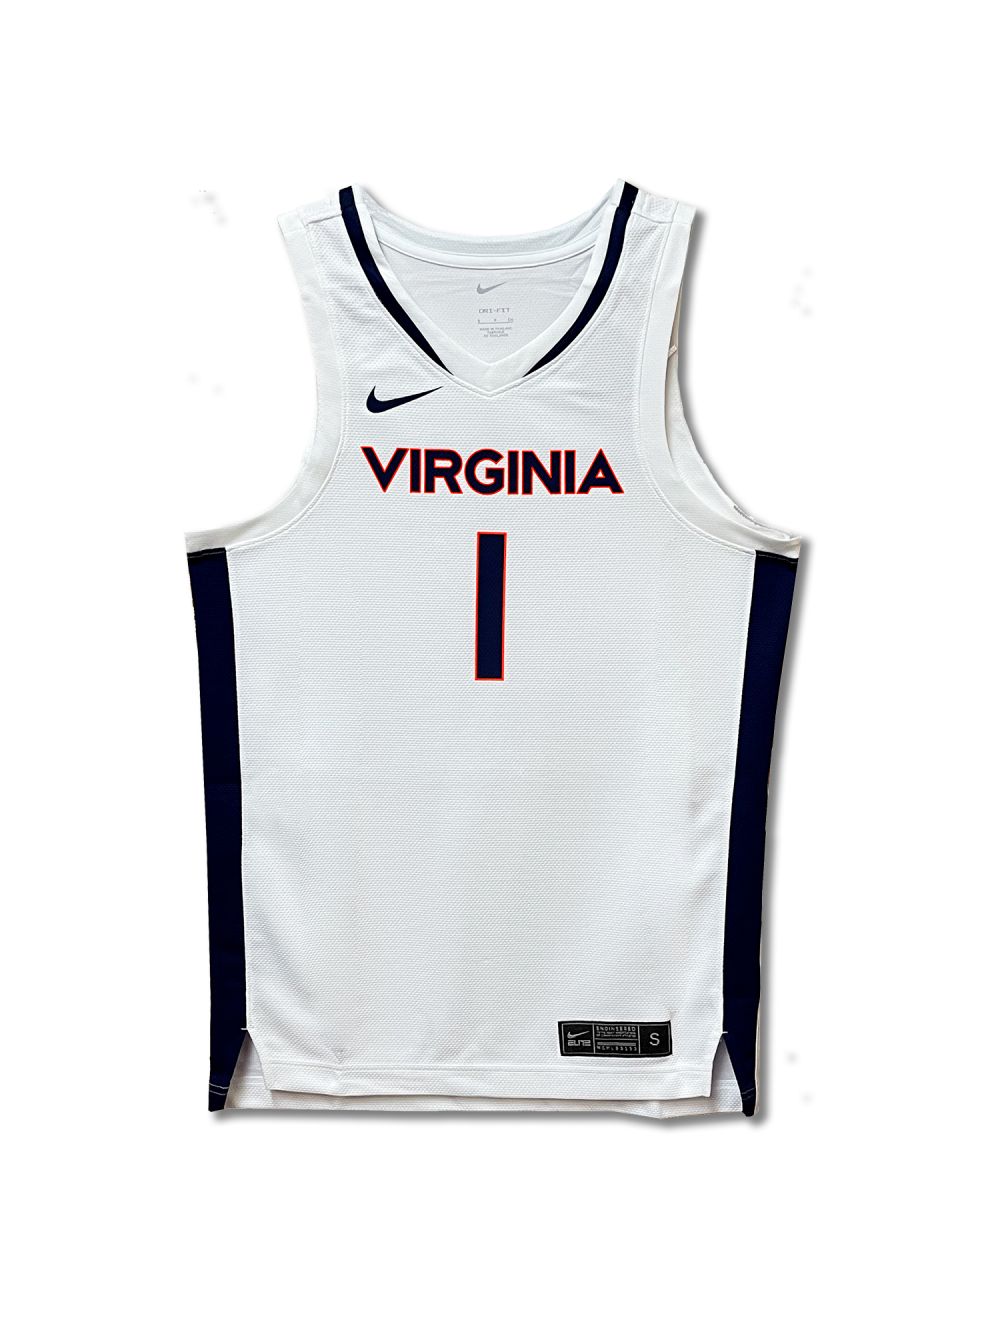 Men's Nike #1 White Virginia Cavaliers Replica Basketball Jersey